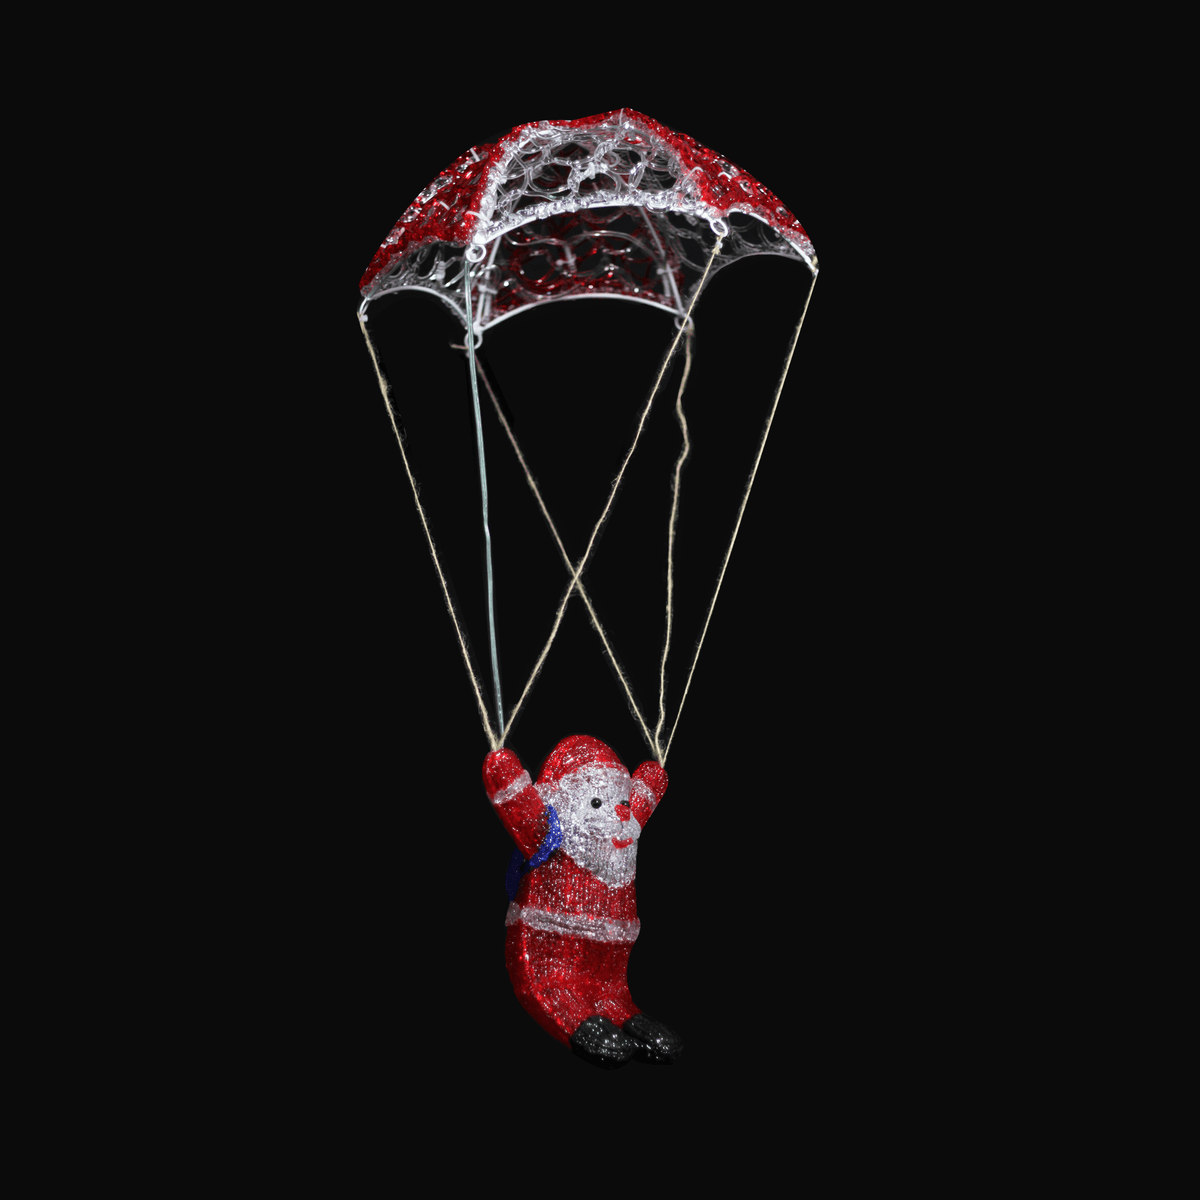 3D Acrylic Parachuting Santa